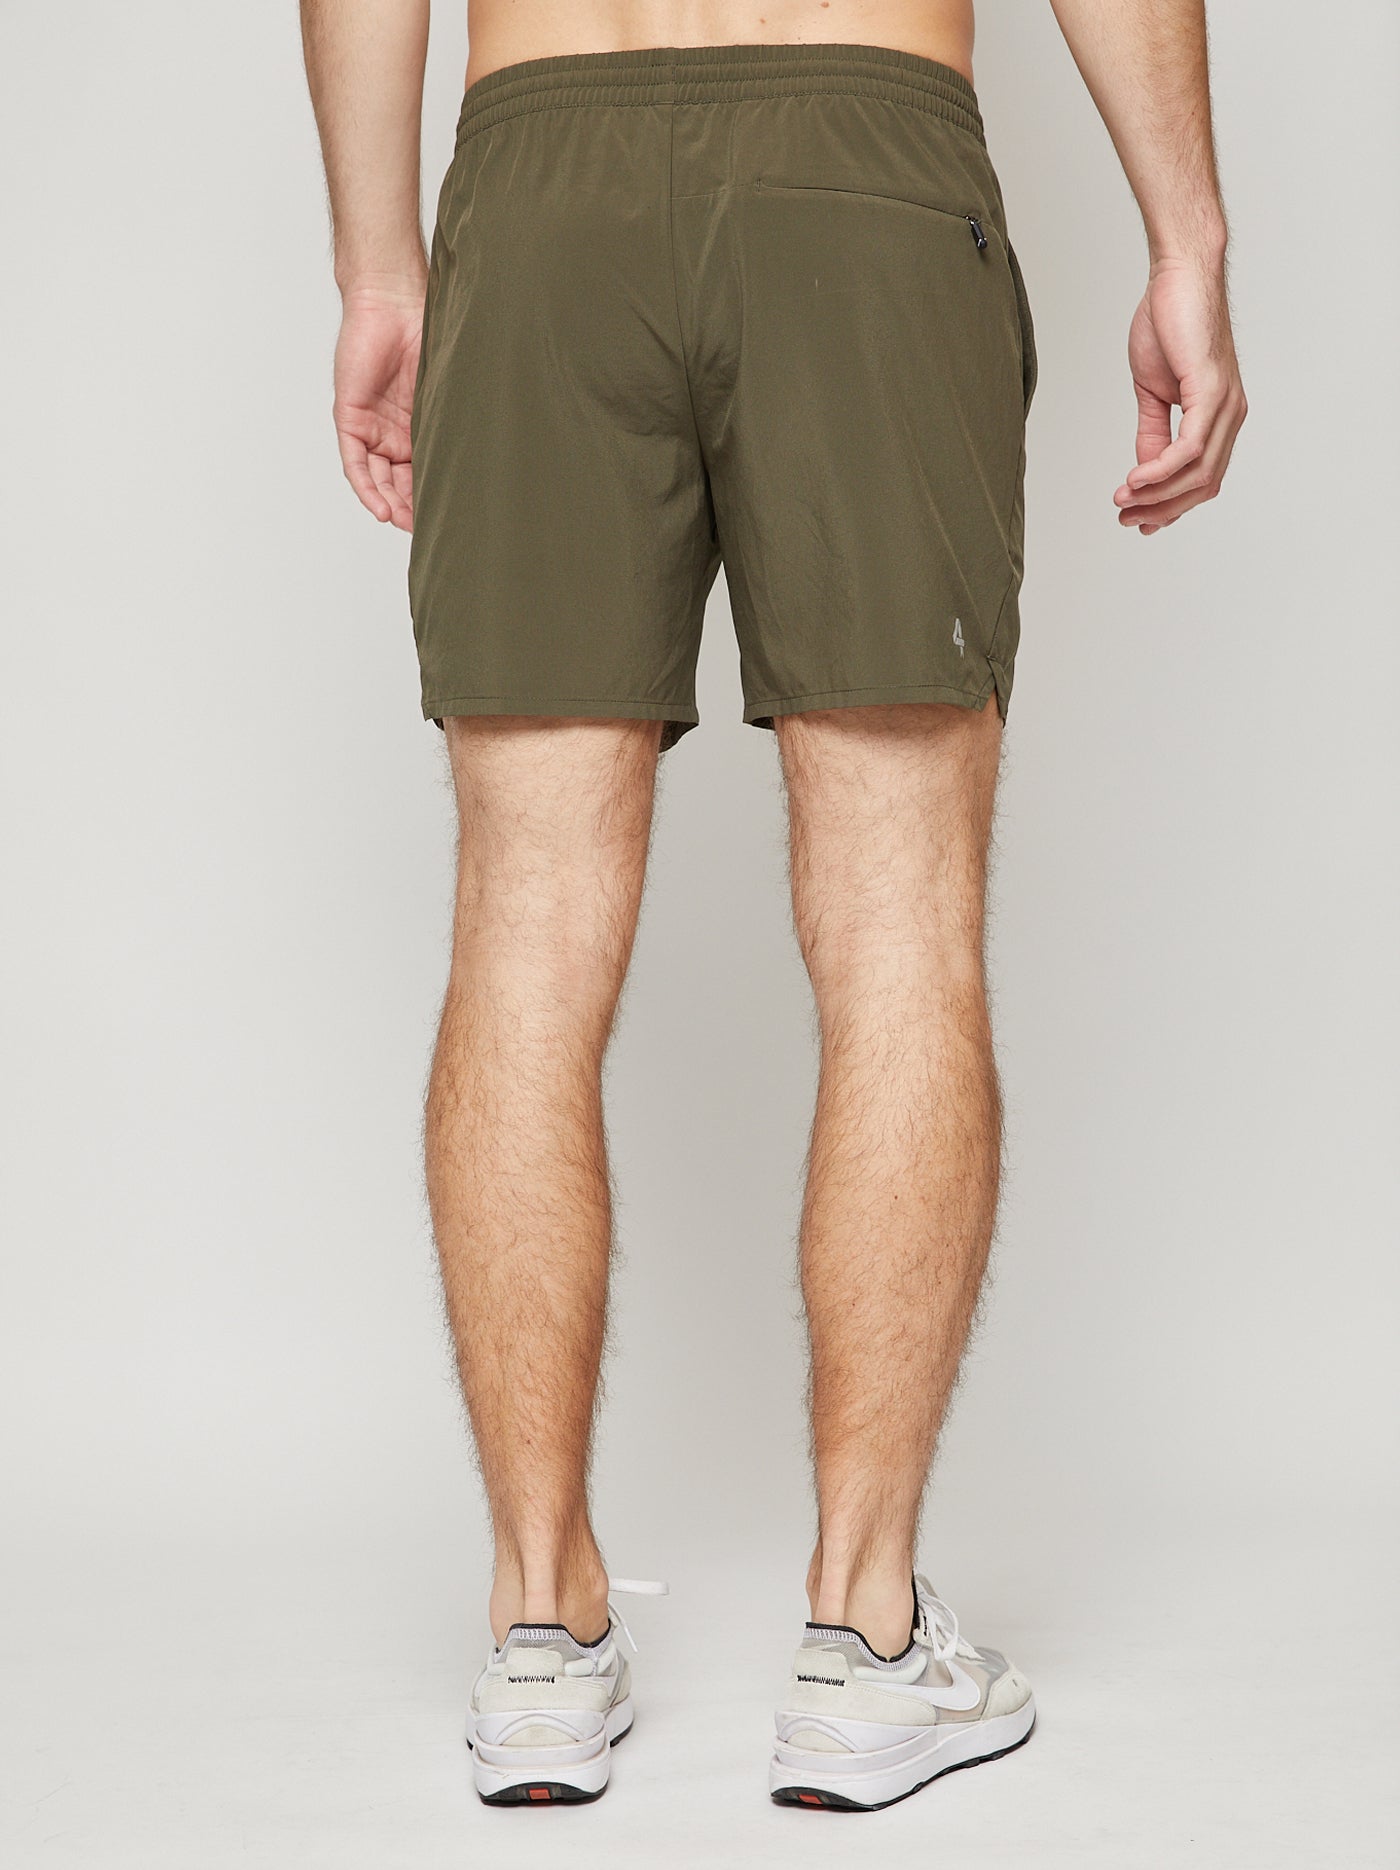 6 Inseam Fourlaps Men\'s Endure - inch Short: Shorts